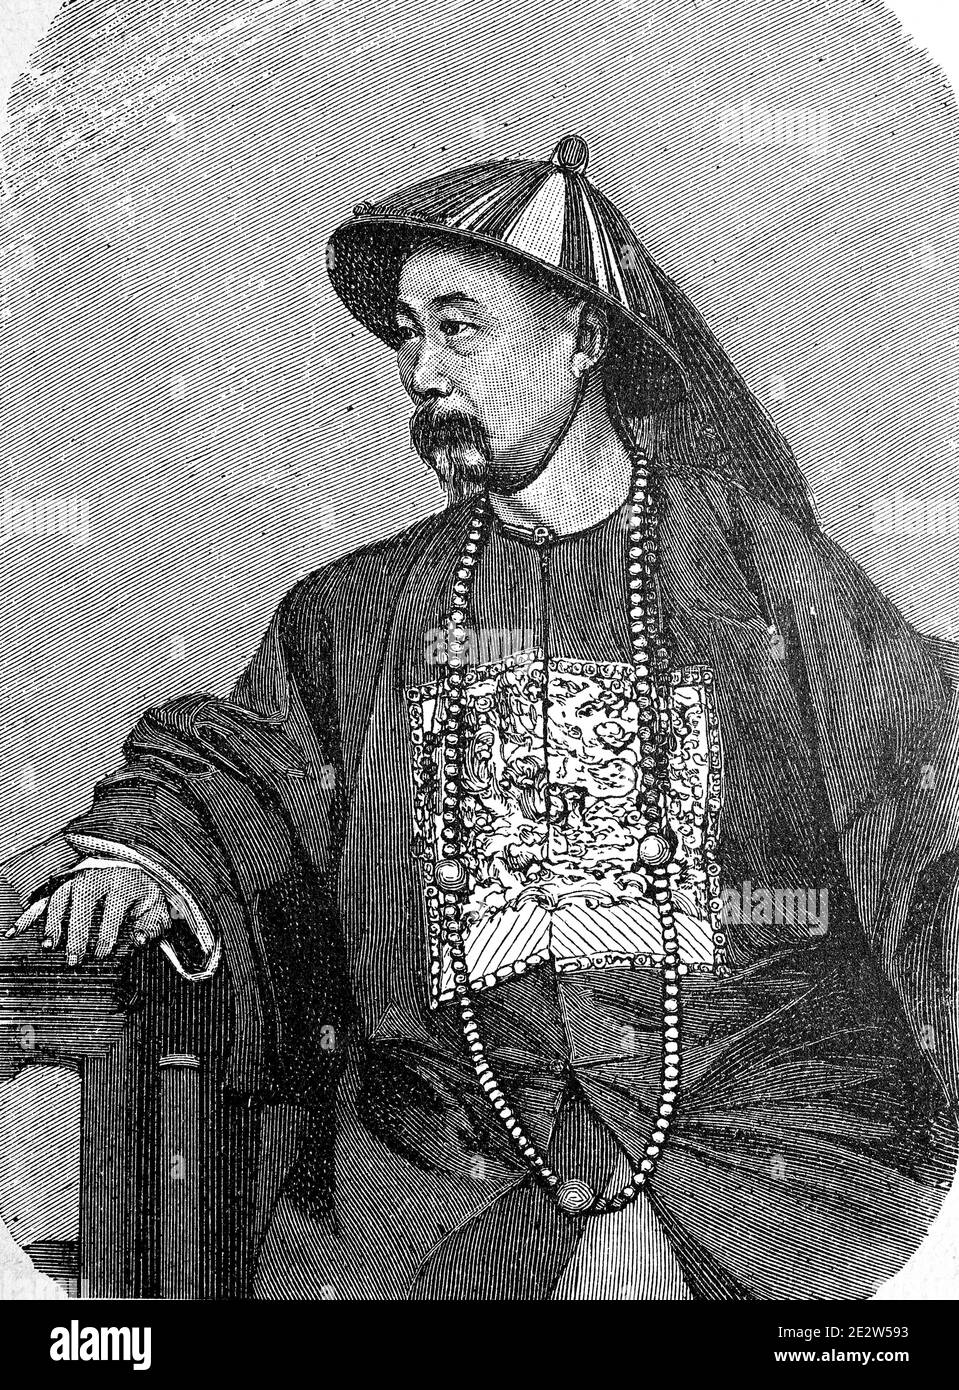 Li Hongzhang, Li Hung-chang, Li Hung Tschang, 15 February 1823 - 7 November 1901,r a Chinese general who ended several major rebellions, as Viceroy of Zhili he was one of the most powerful statesmen in feudal China  /  Li Hongzhang, Li Hung-chang, Li Hung Tschang, 15. Februar 1823 - 7. November 1901,r ein chinesischer General, der mehrere größere Rebellionen beendete, als Vizekönig von Zhili war er einer der mächtigsten Staatsmänner im feudalen China, Historisch, historical, digital improved reproduction of an original from the 19th century / digitale Reproduktion einer Originalvorlage aus dem Stock Photo